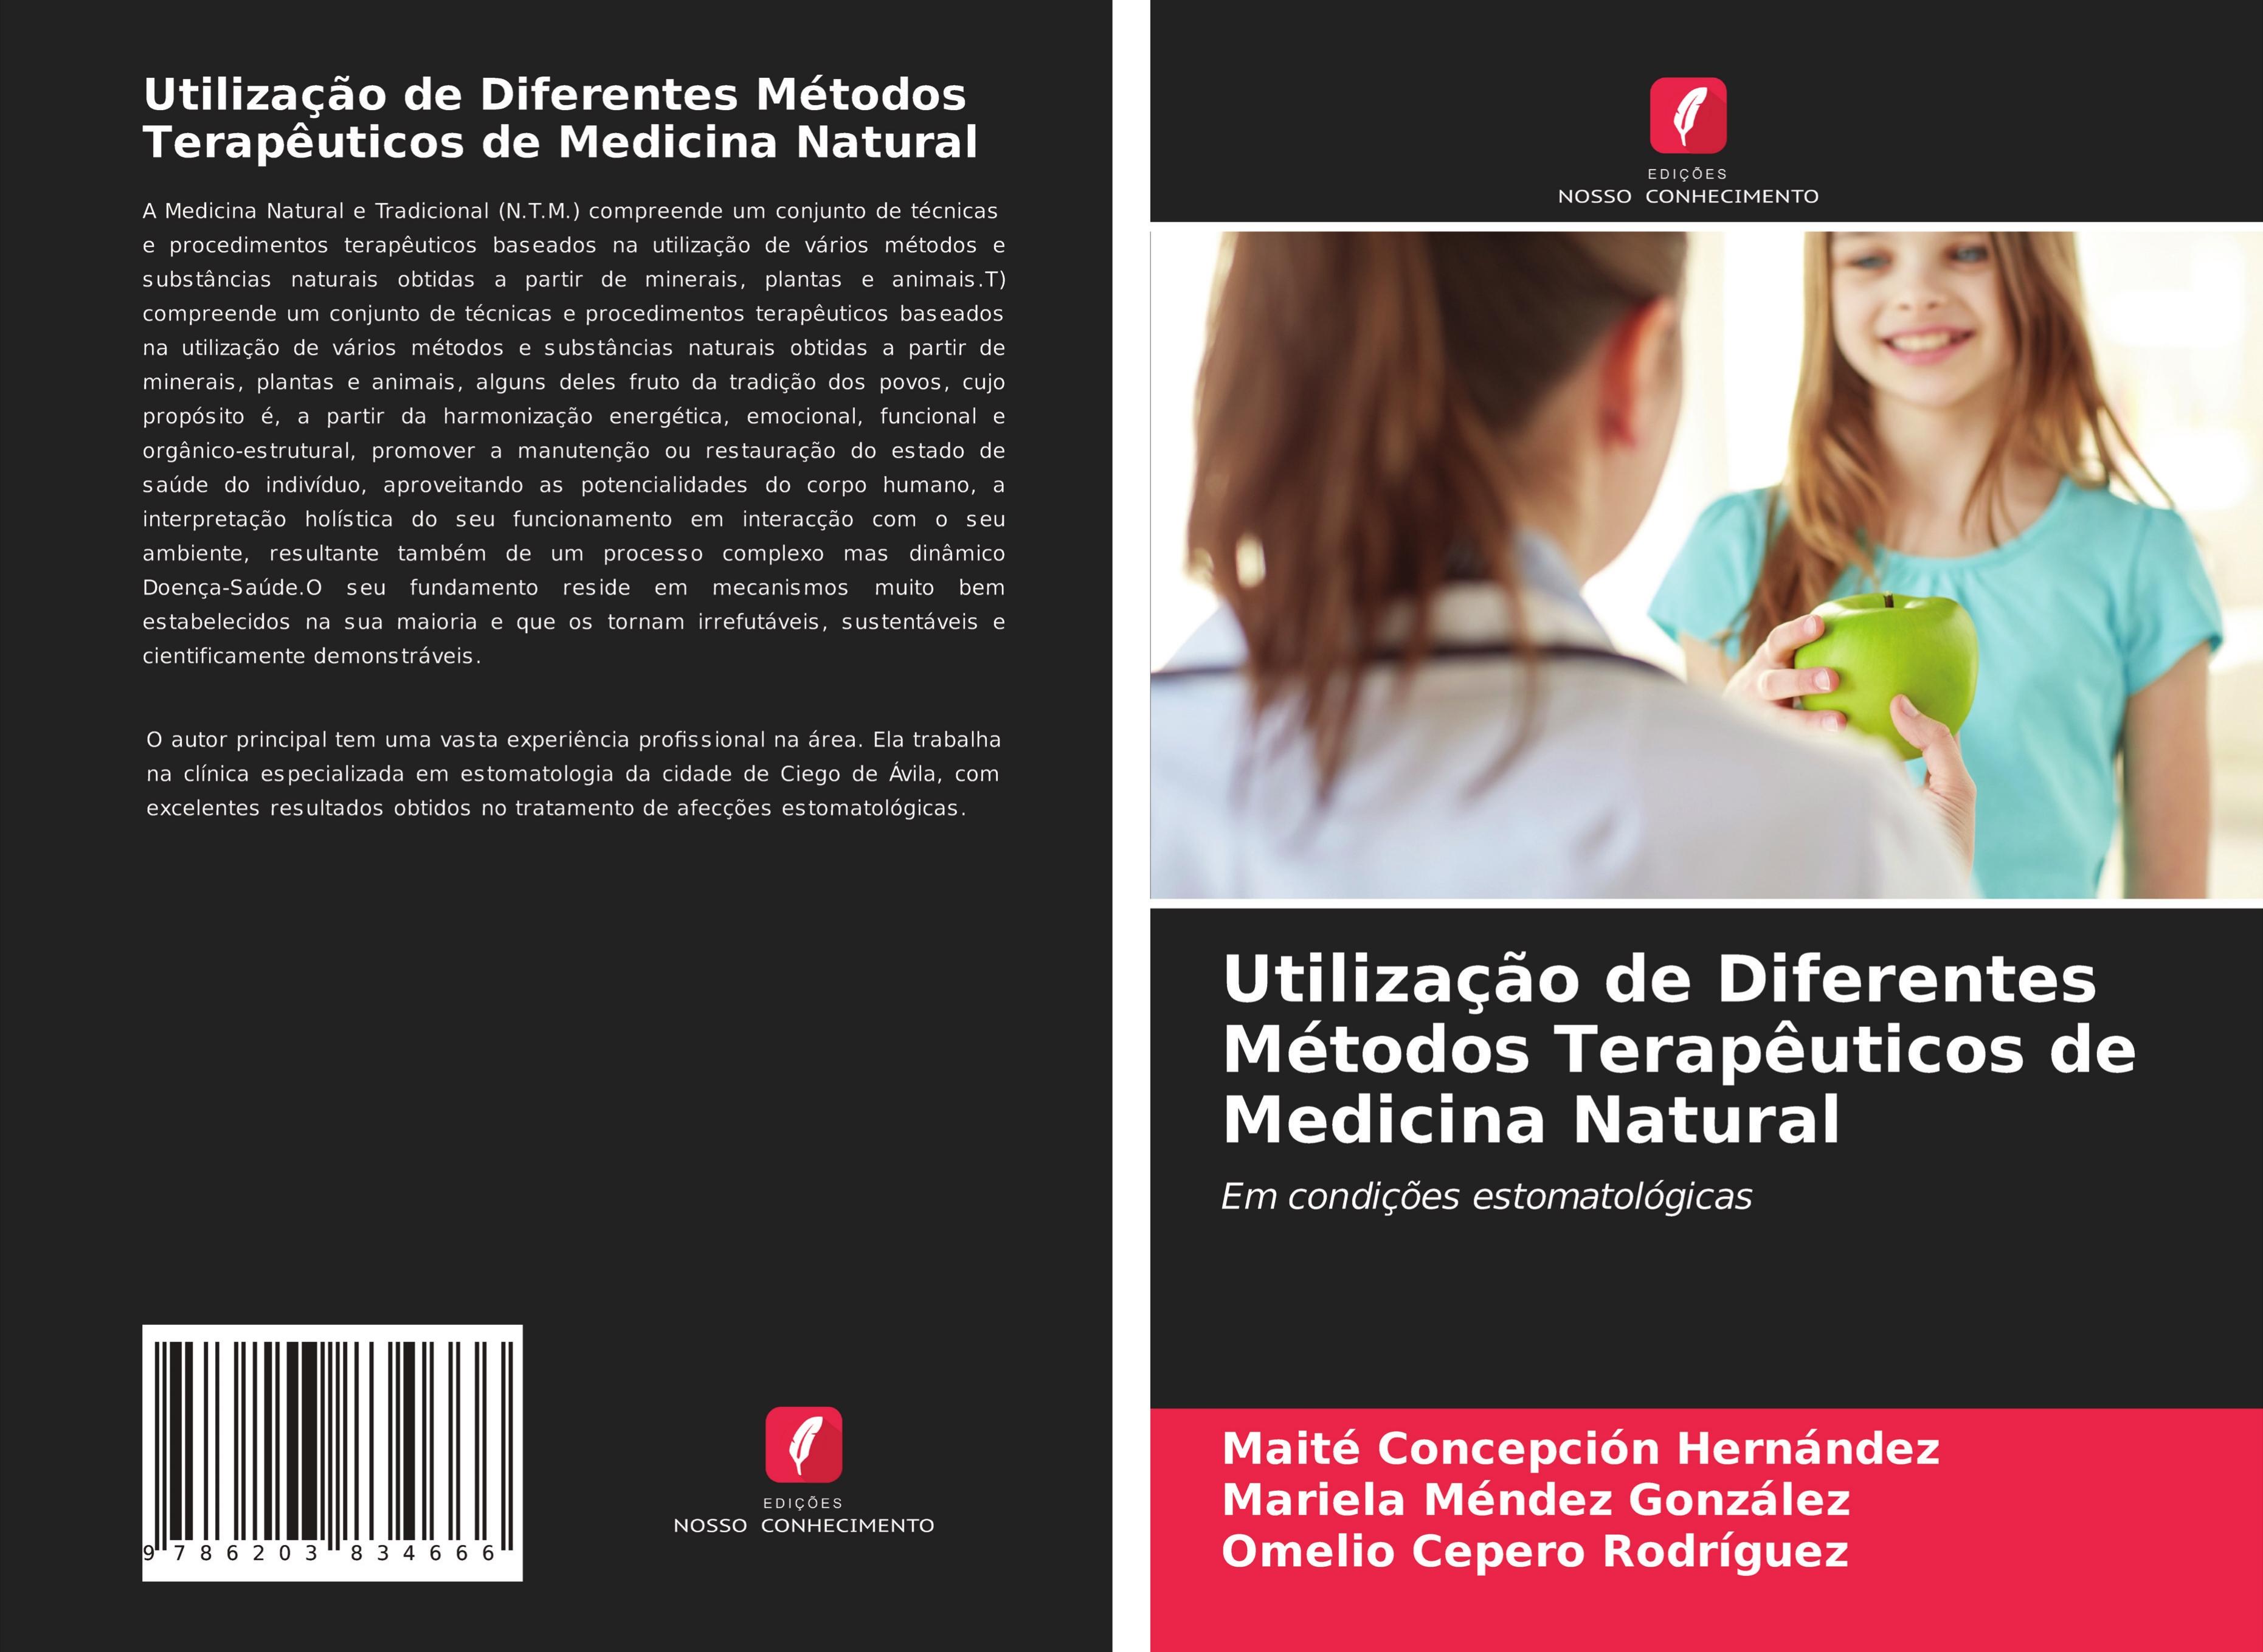 Utilização de Diferentes Métodos Terapêuticos de Medicina Natural - Concepción Hernández, Maite Méndez González, Mariela Cepero Rodriguez, Omelio